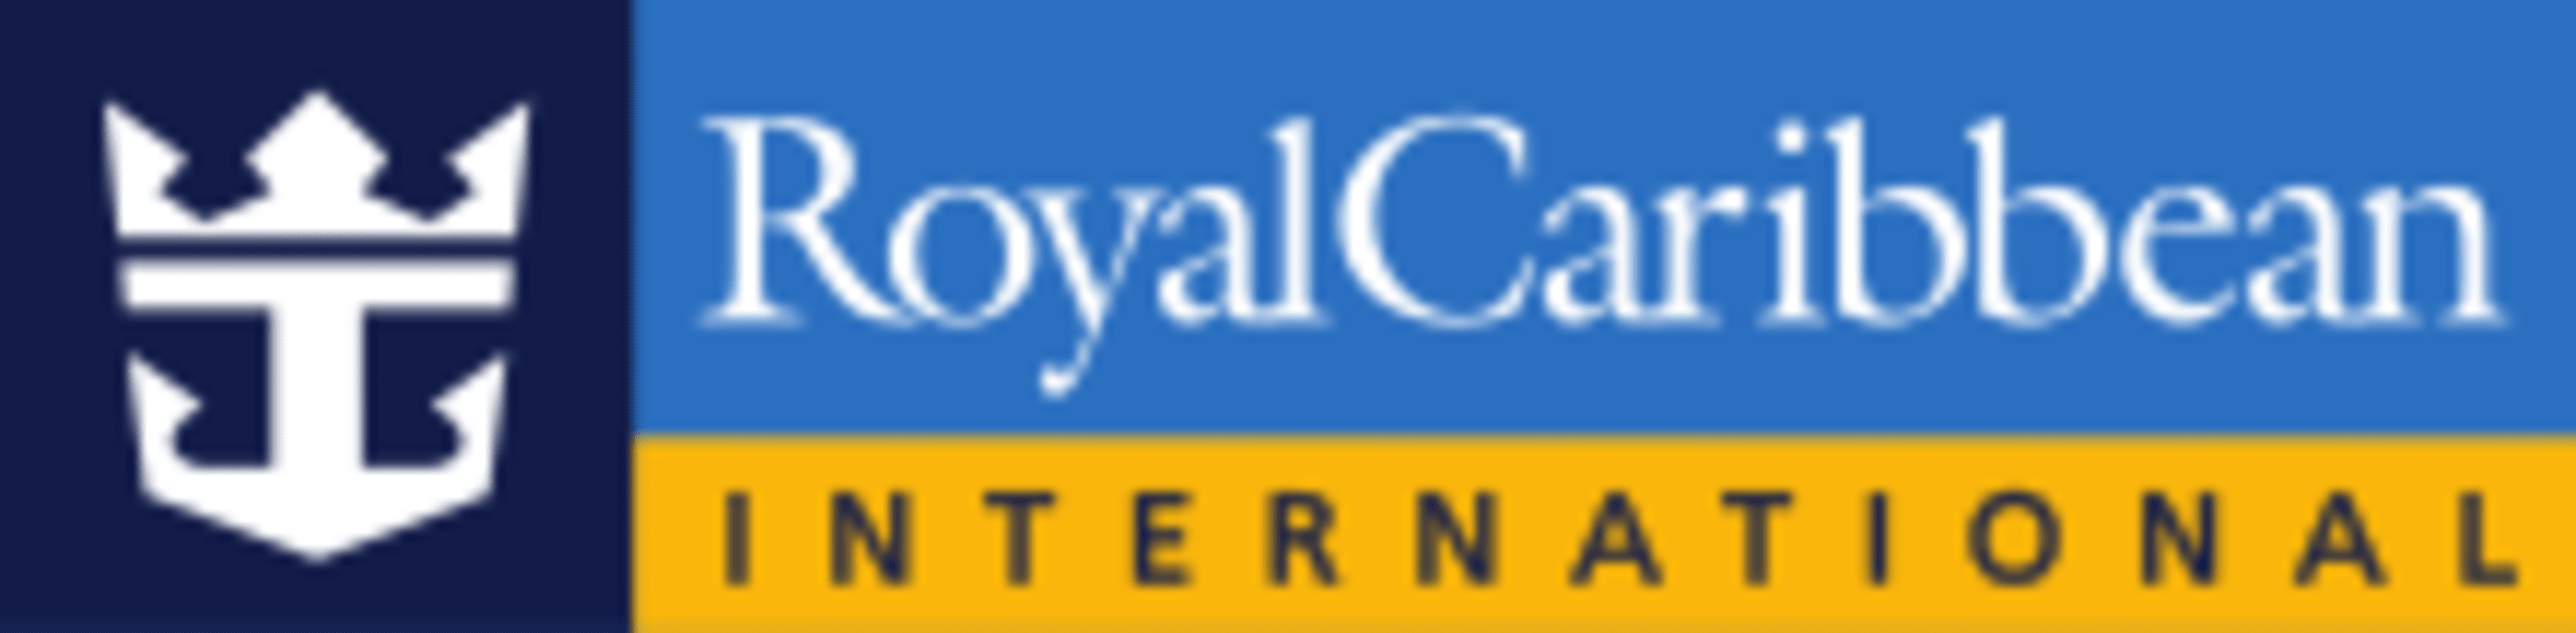 Royal Caribbean Code